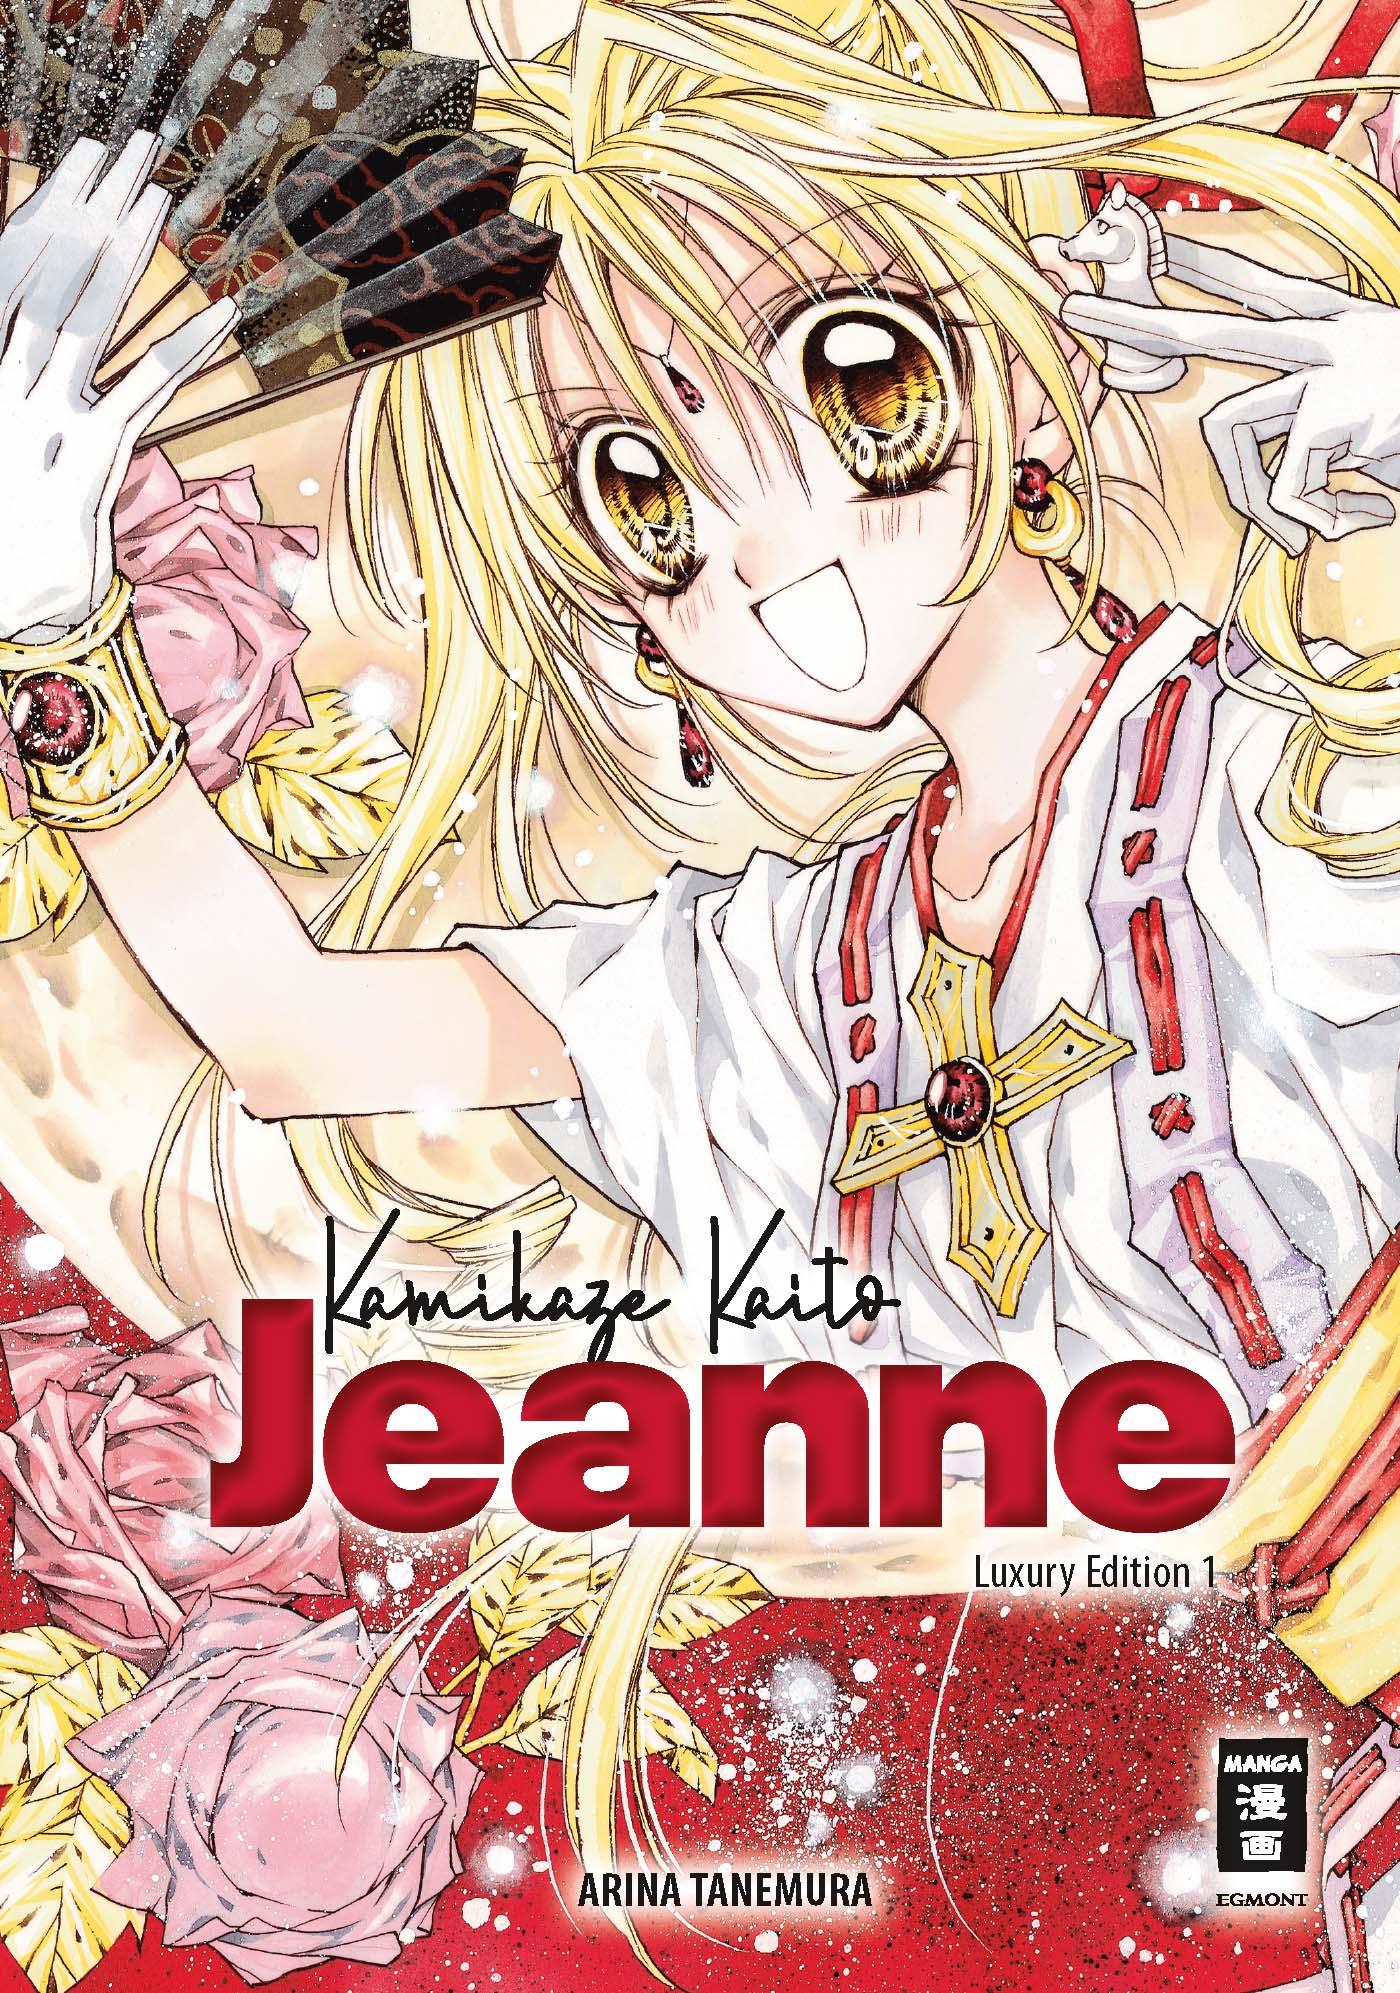 Kamikaze Kaito Jeanne – Luxury Edition